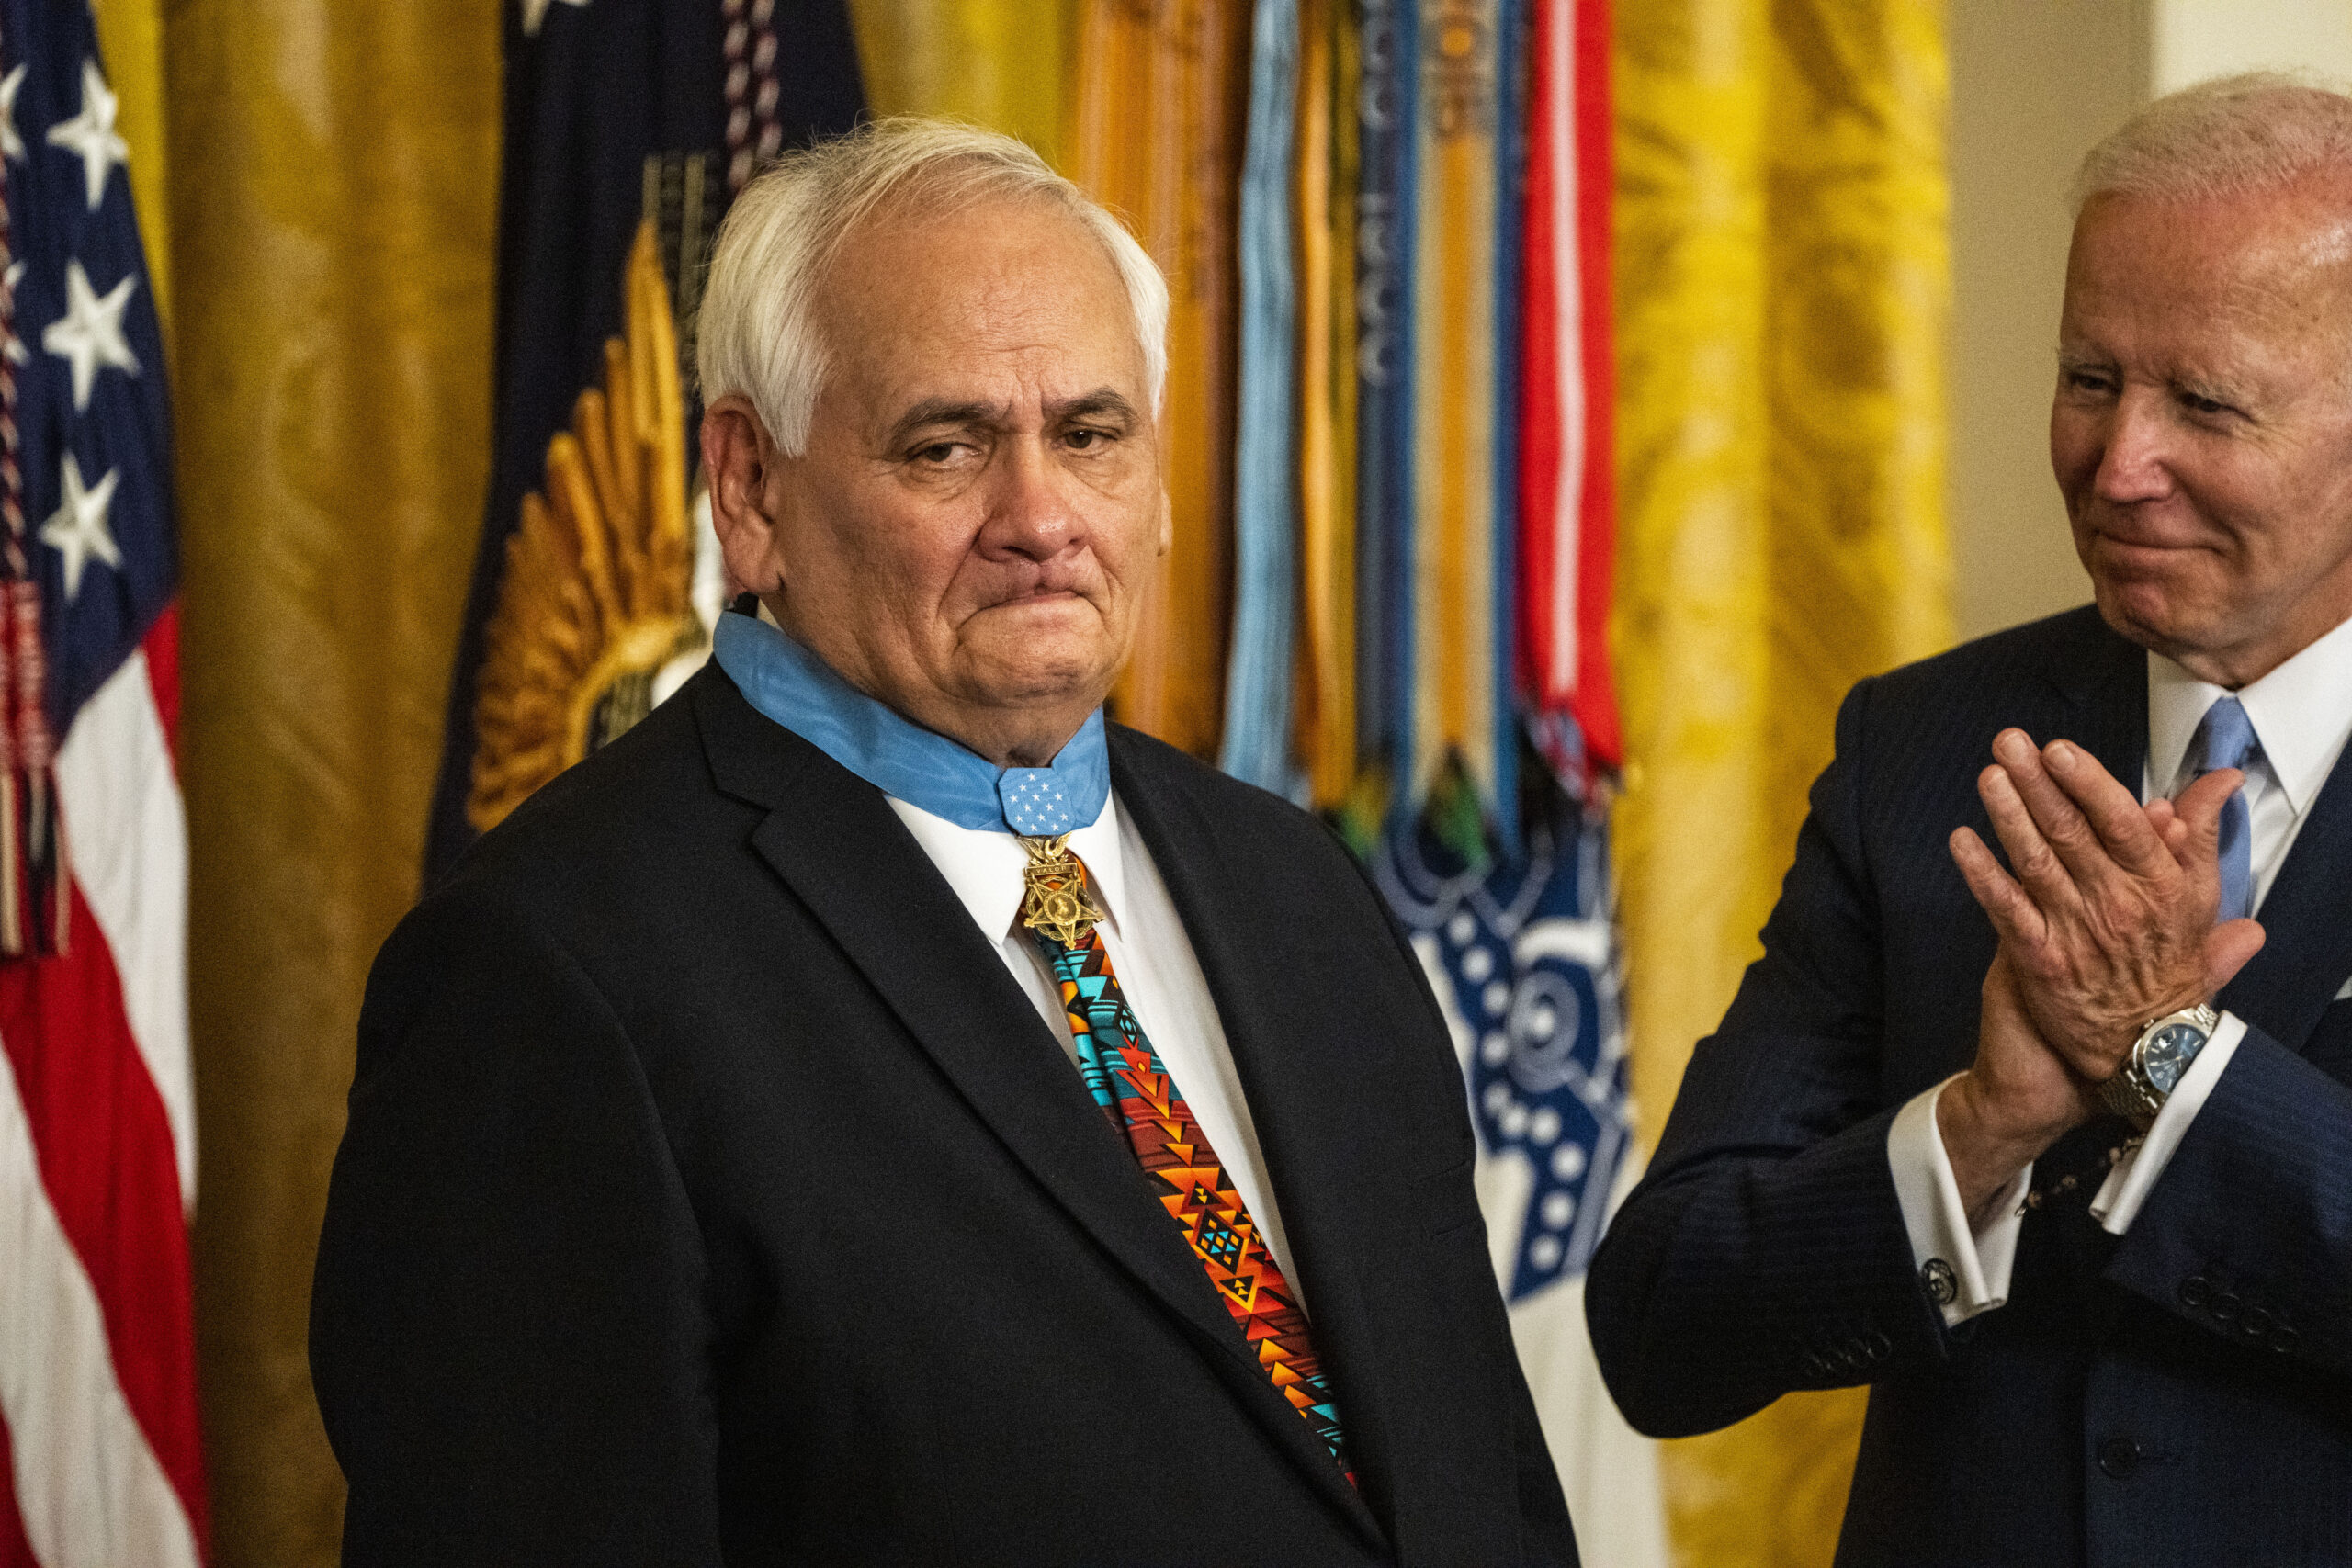 No, Biden Didn't Put Medal of Honor on Backwards